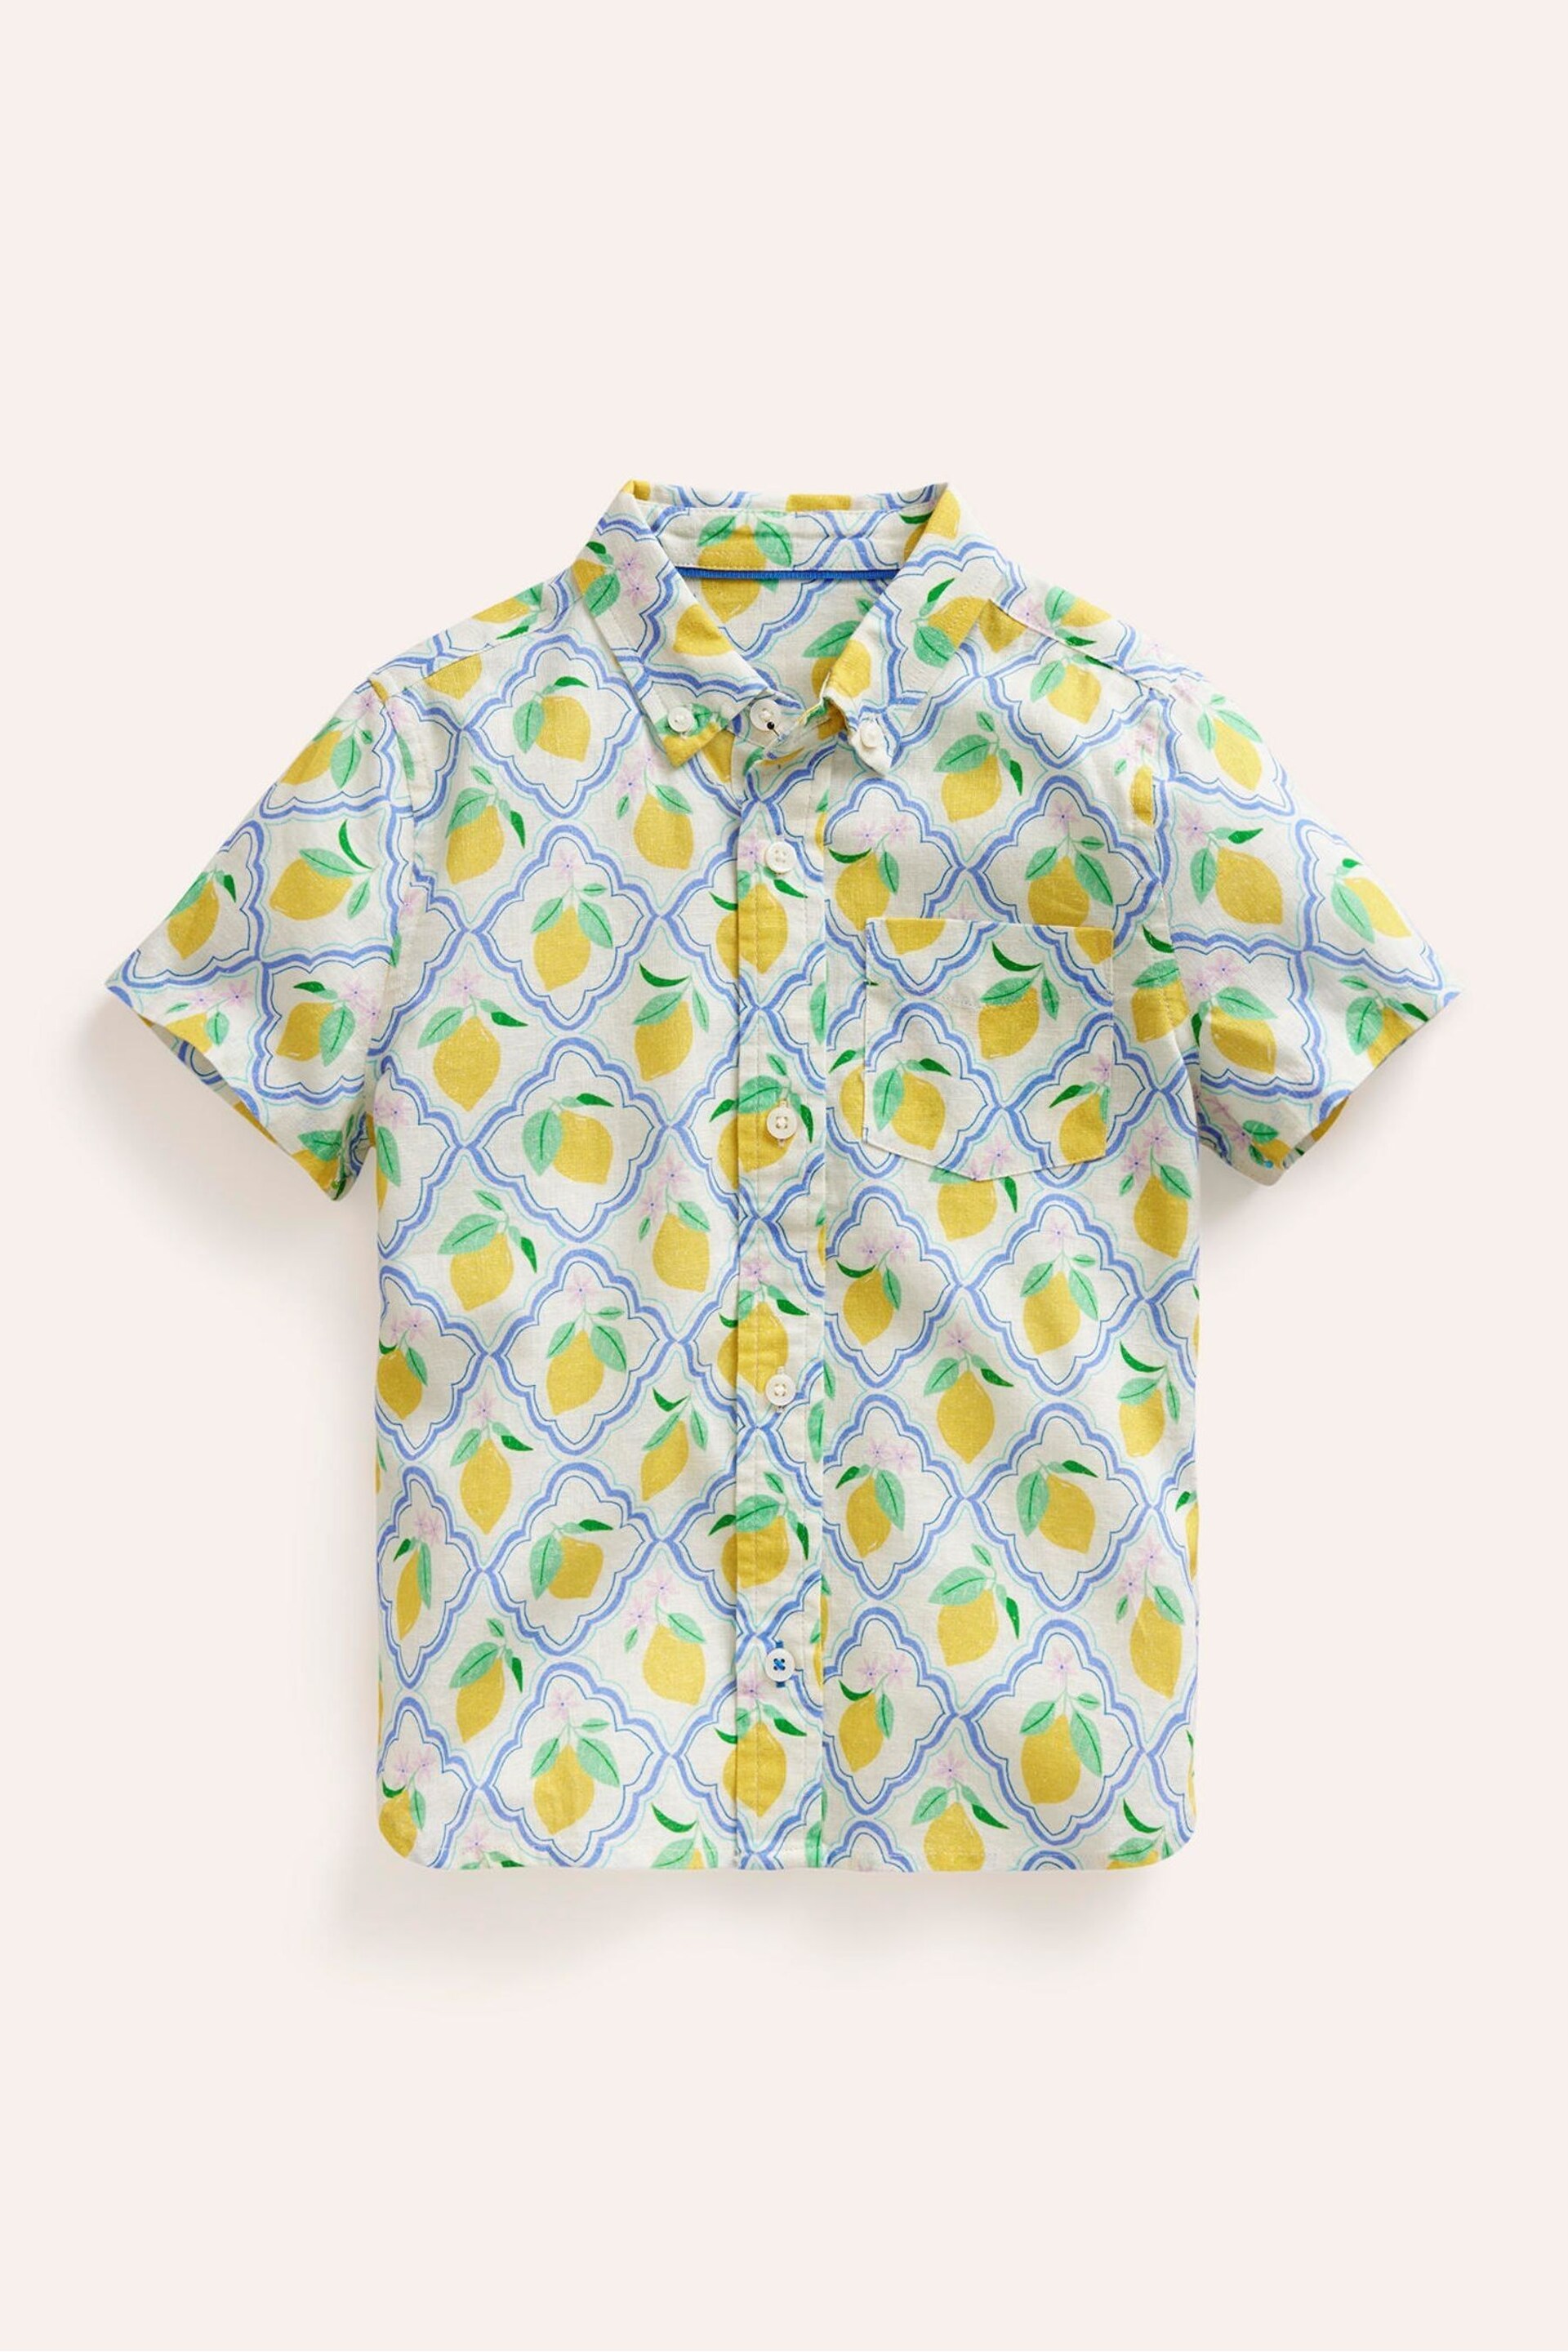 Boden Yellow lemon Cotton Linen Shirt - Image 5 of 7